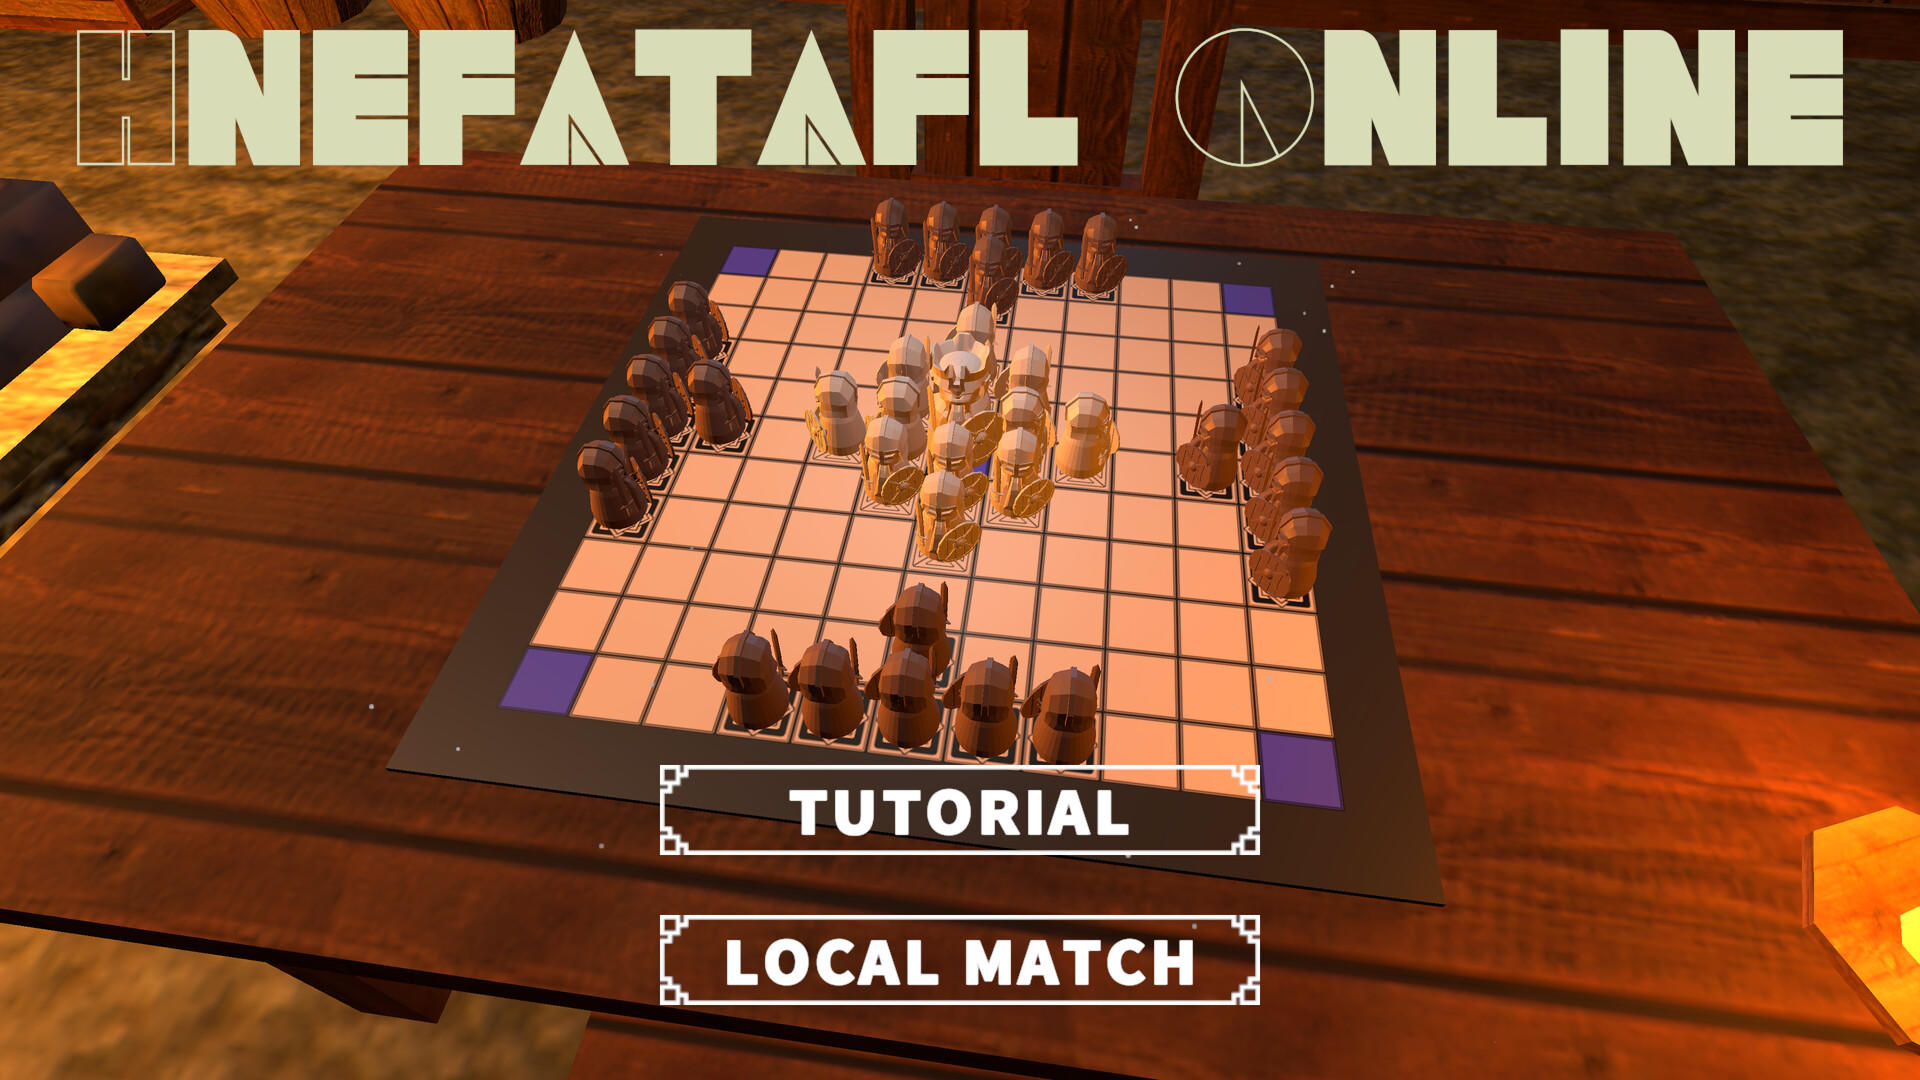 Hnefatafl Online screenshot game